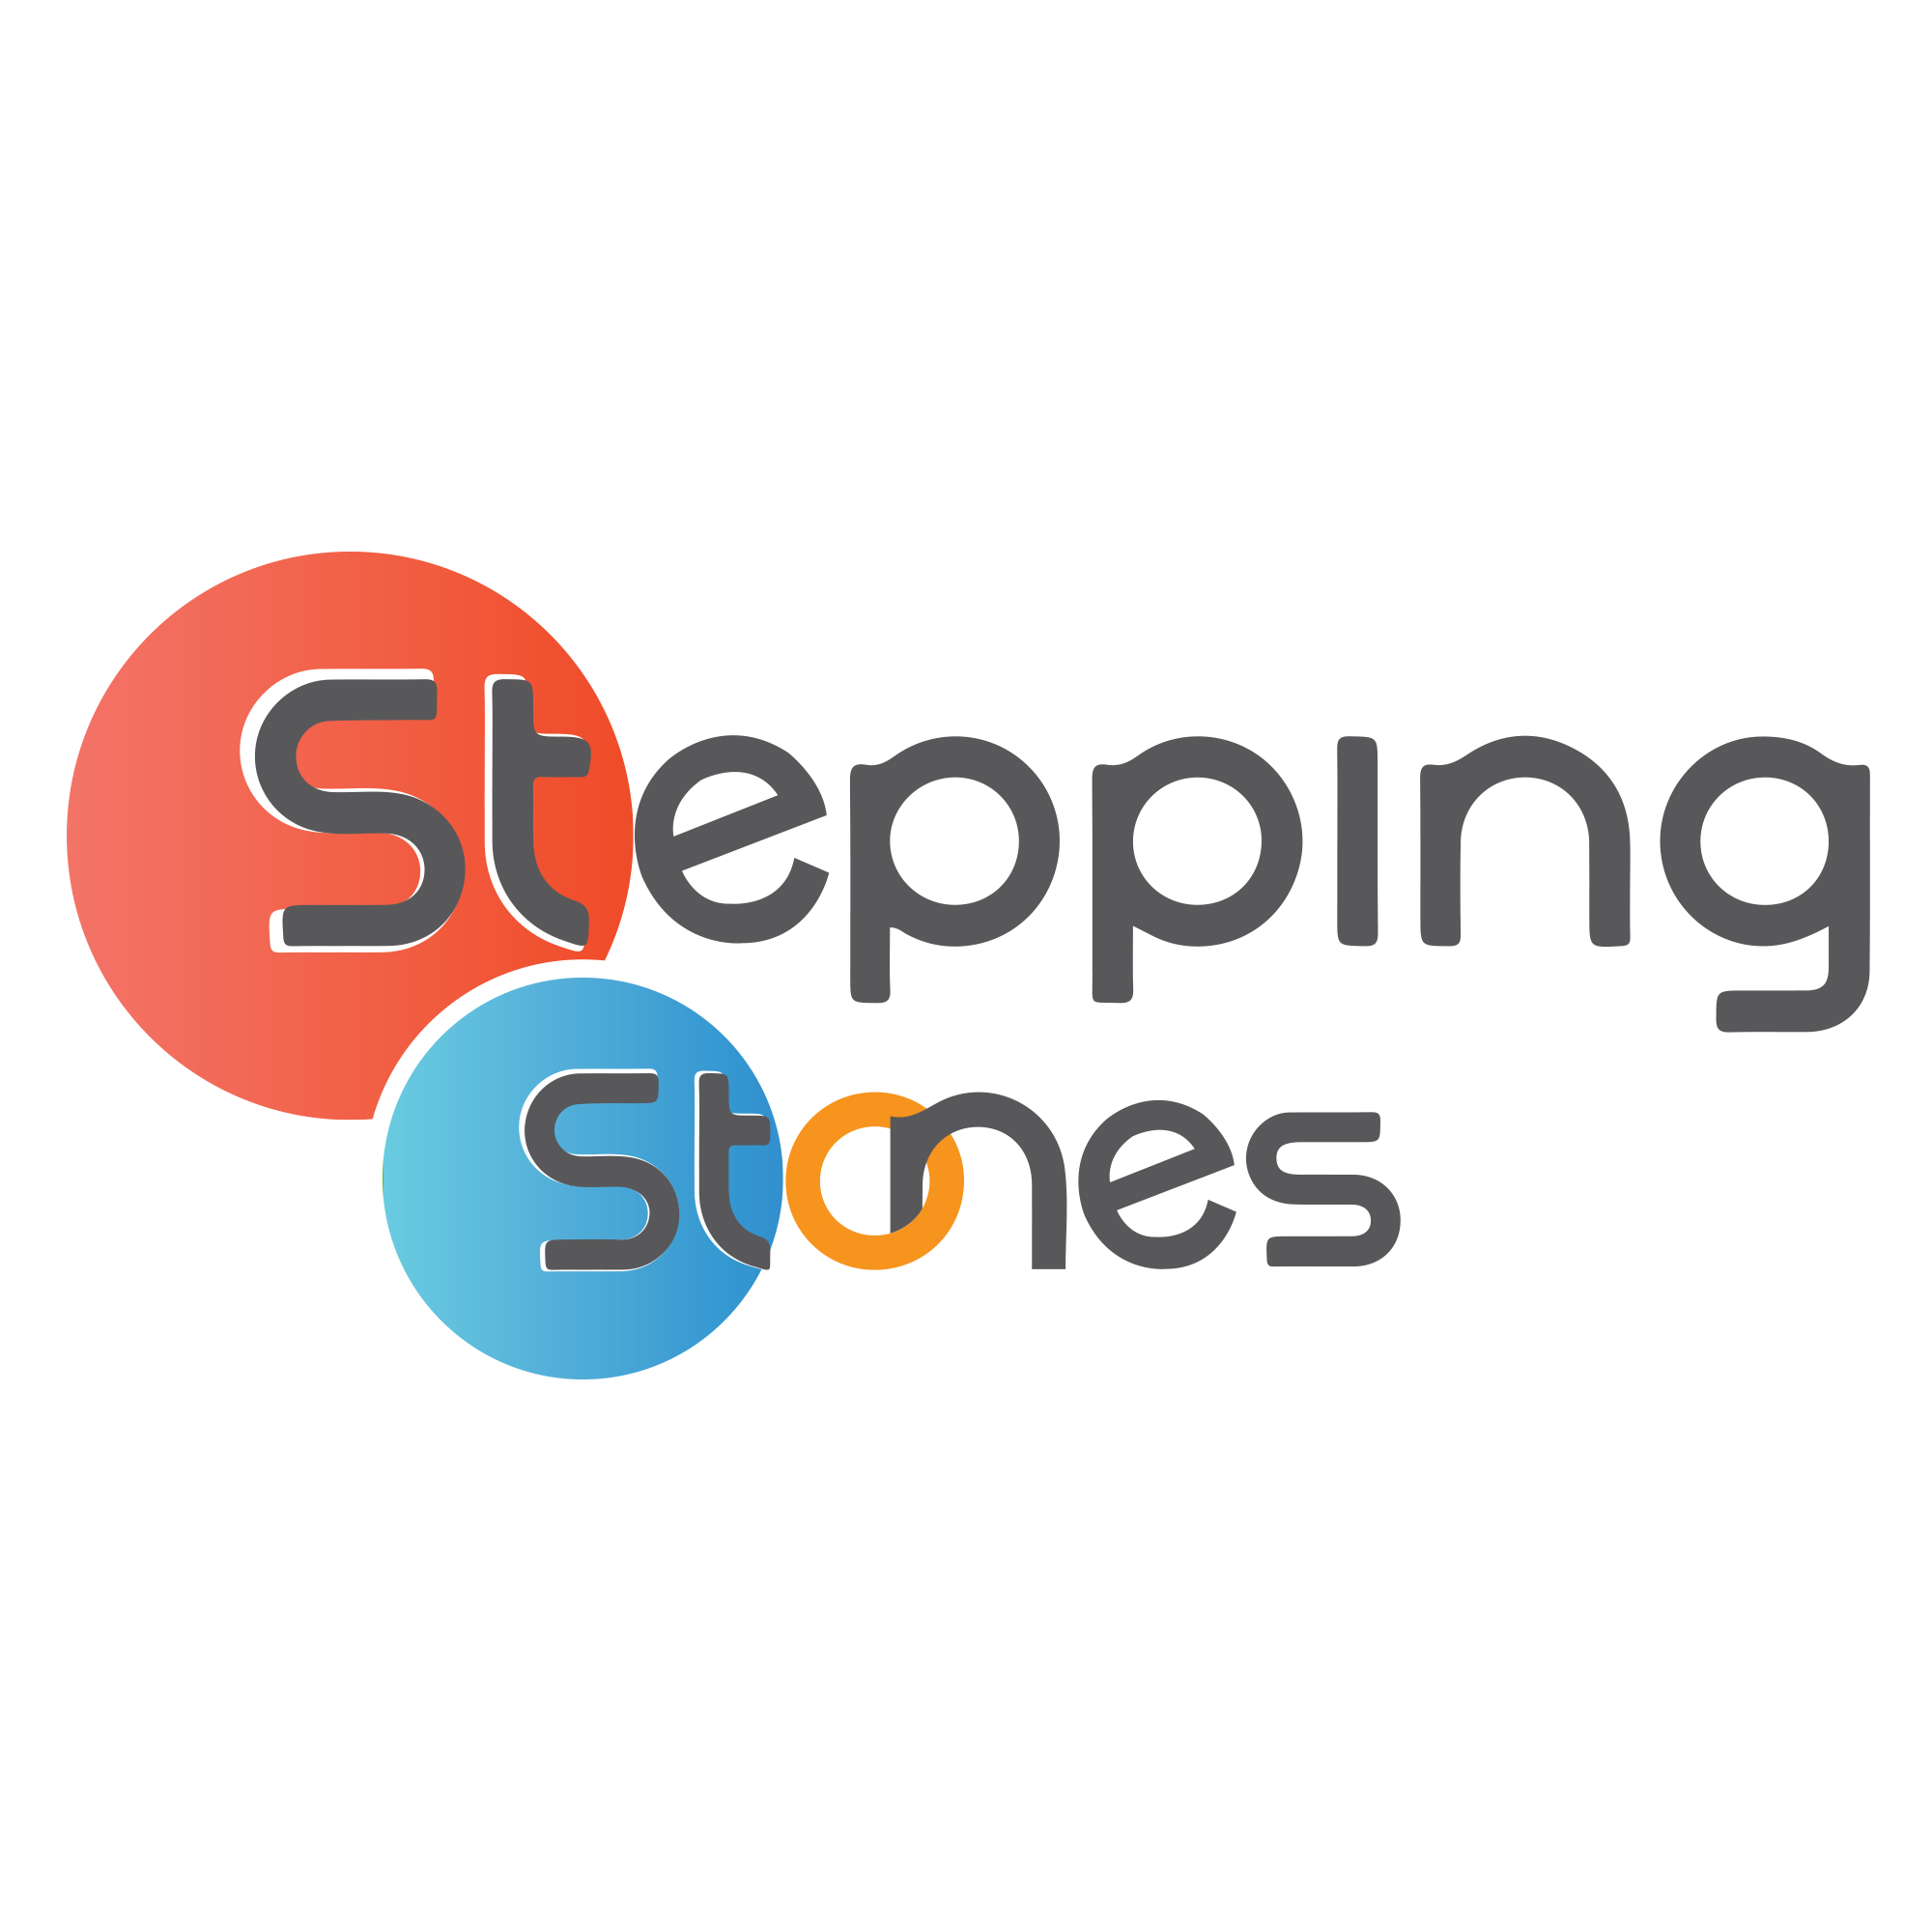 Stepping Stones Branding and Marketing logo